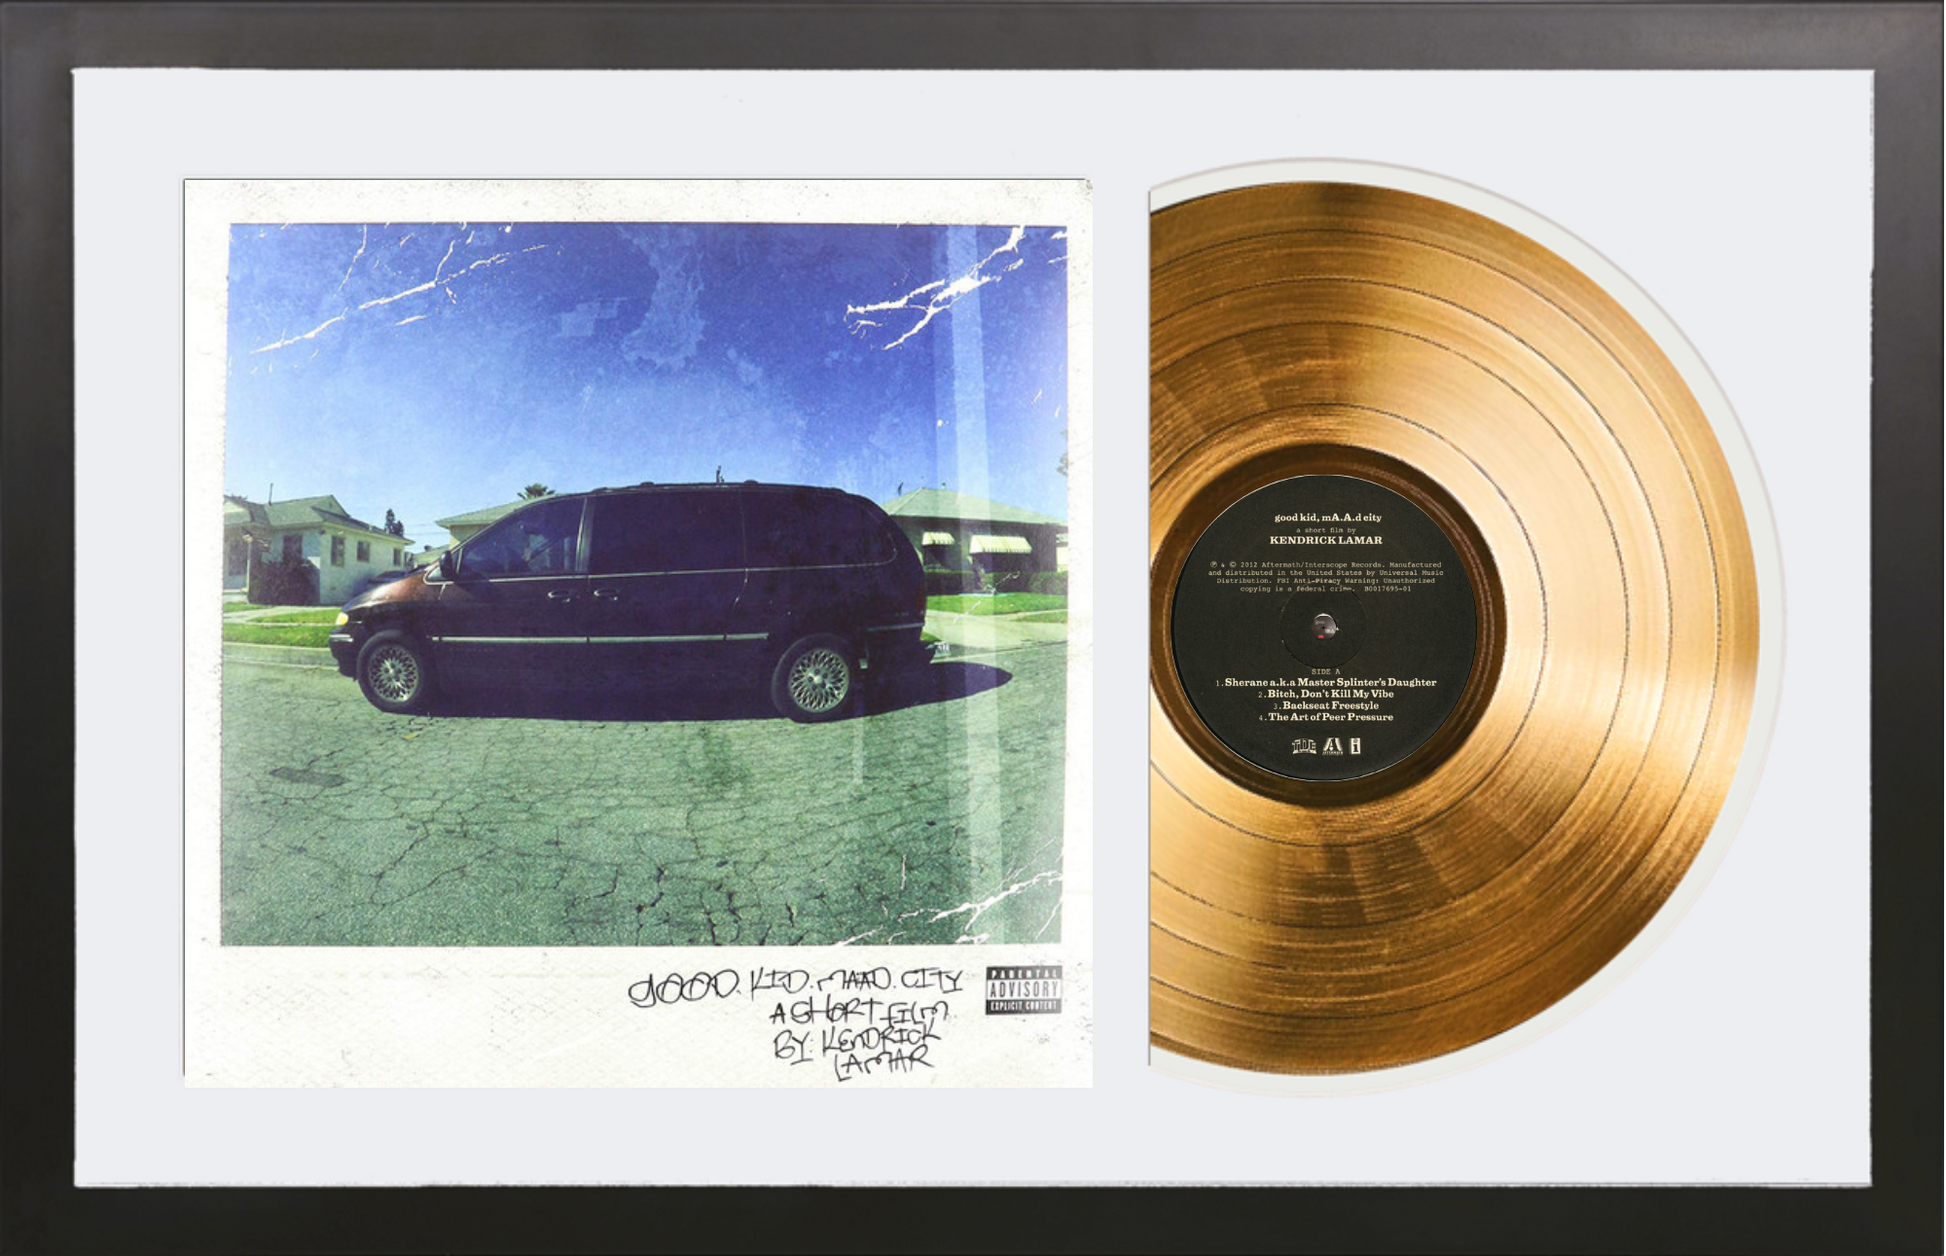 Good Kid Bad City Kendrick Lamar Vinyl for Sale in Belle Isle, FL - OfferUp